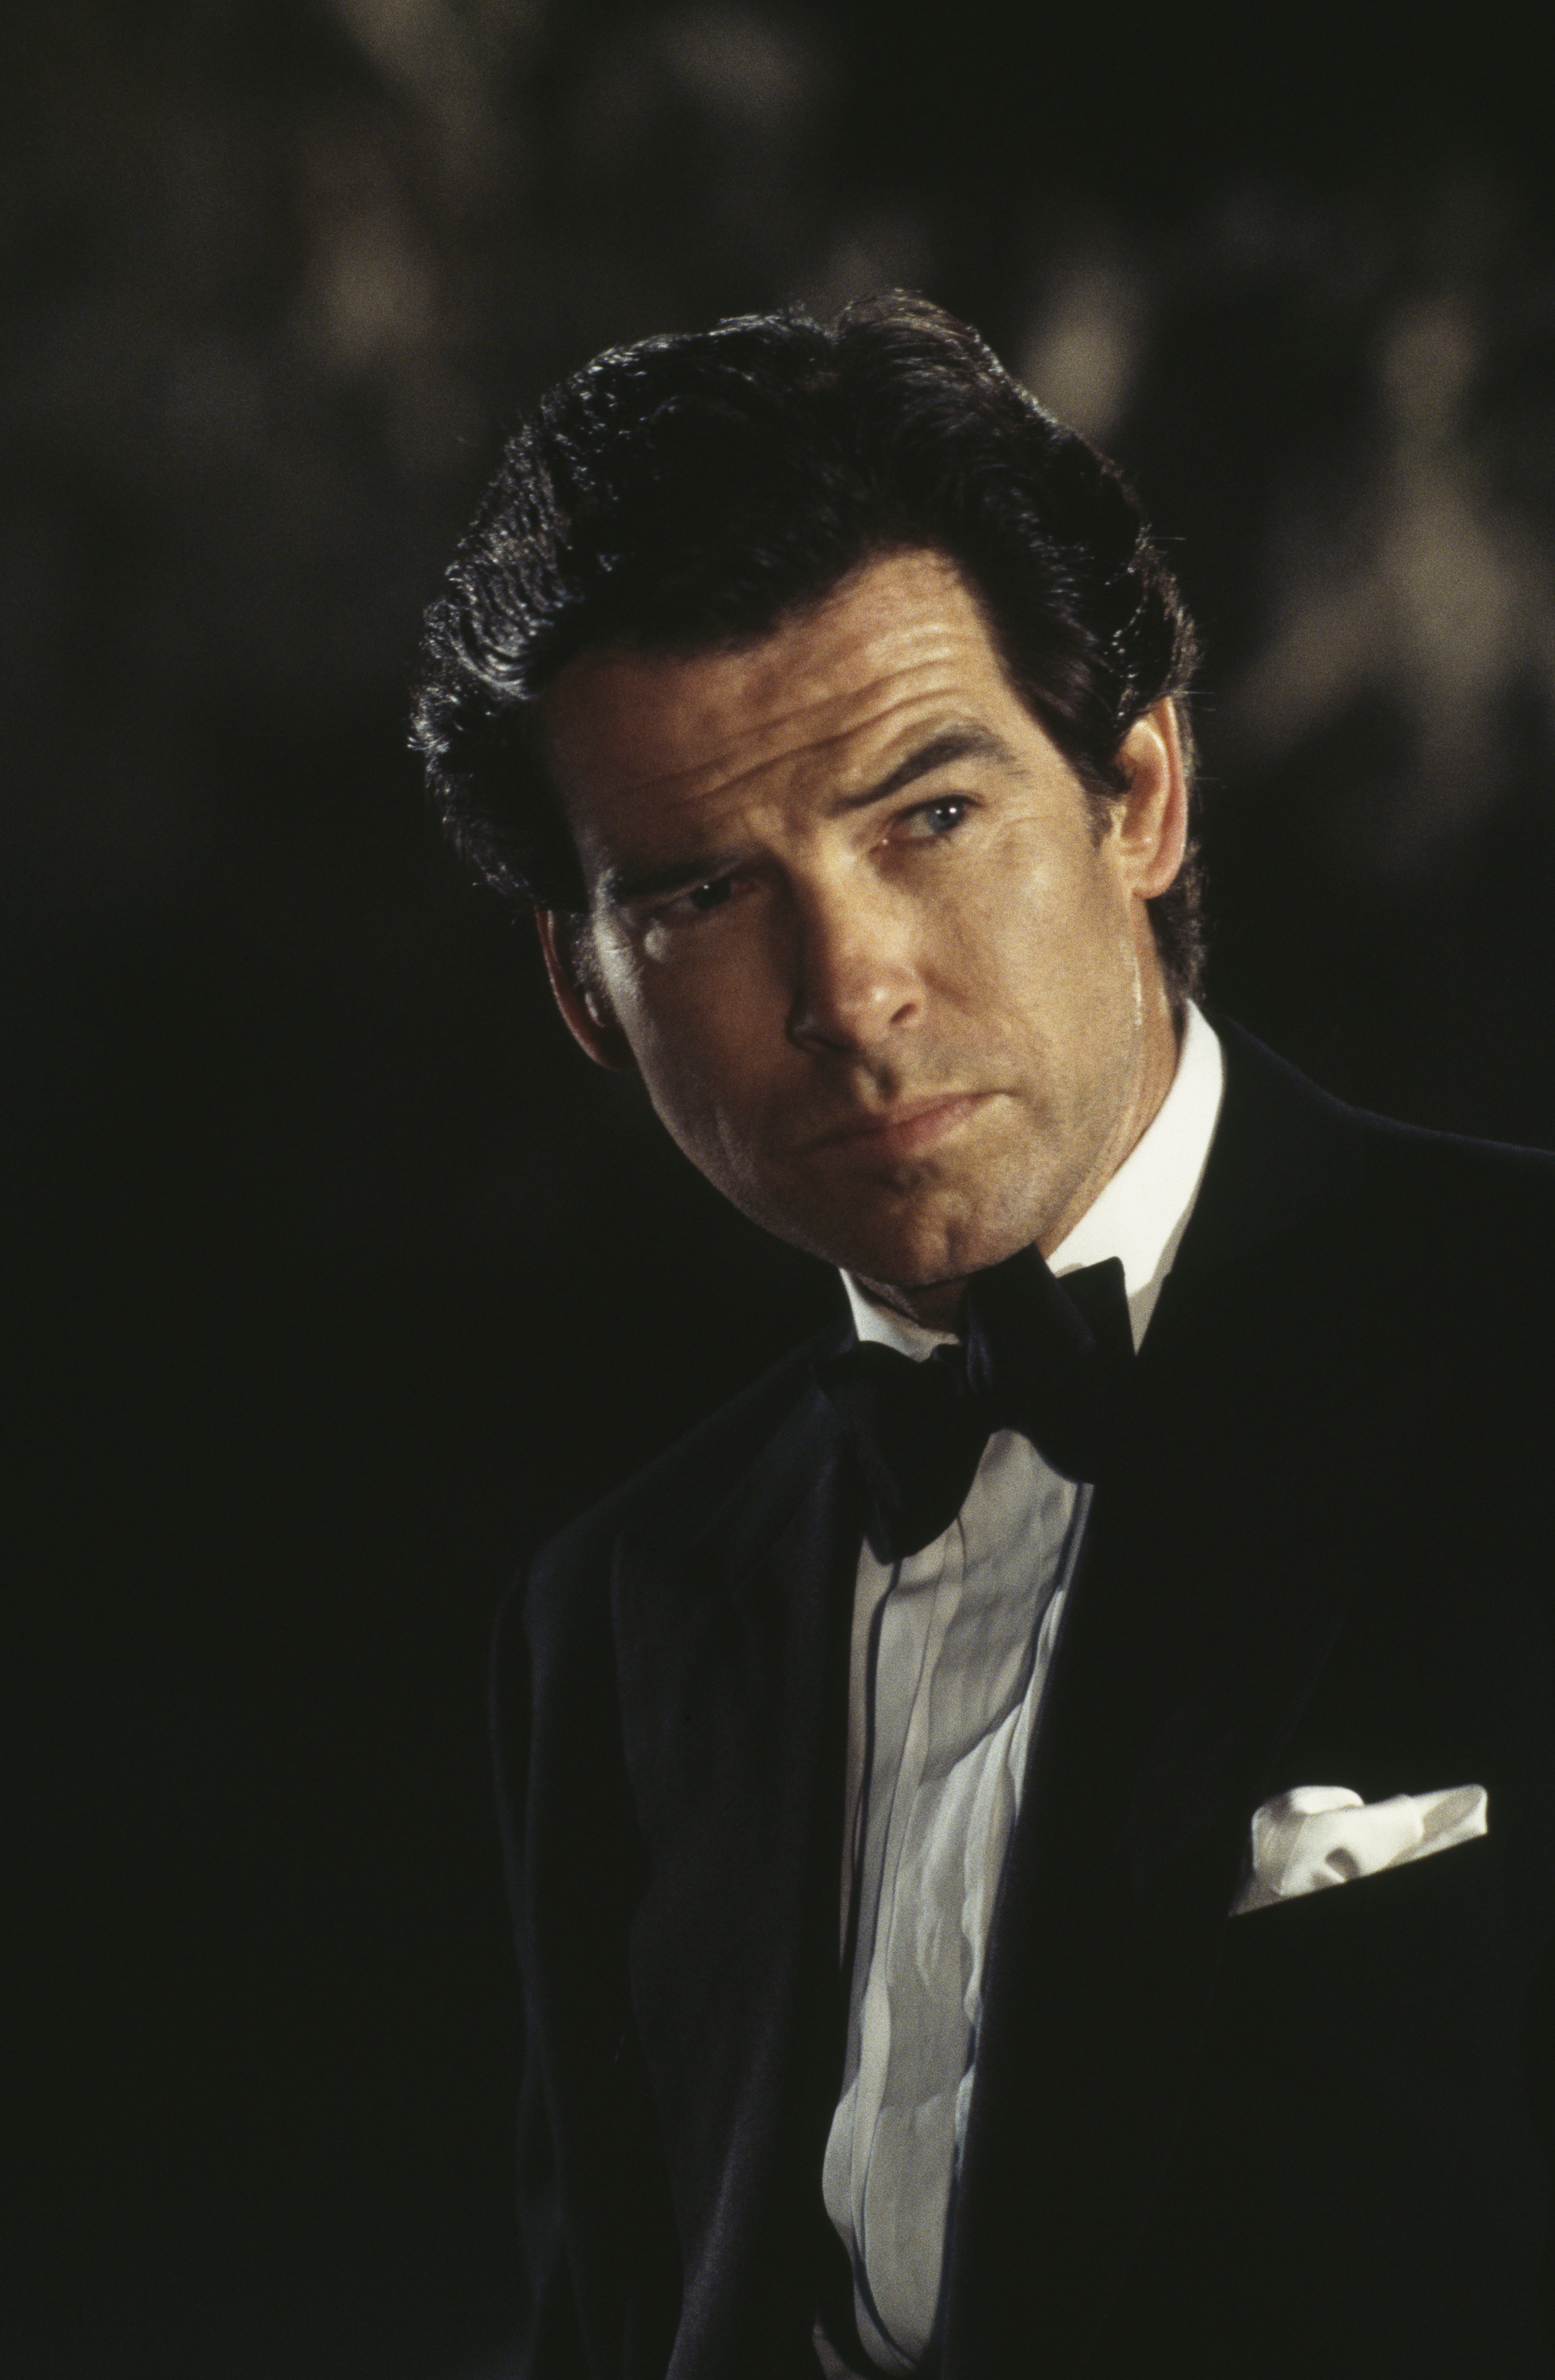 Pierce Brosnan interpreta a James Bond en la película "GoldenEye", en 1995 | Foto: Getty Images